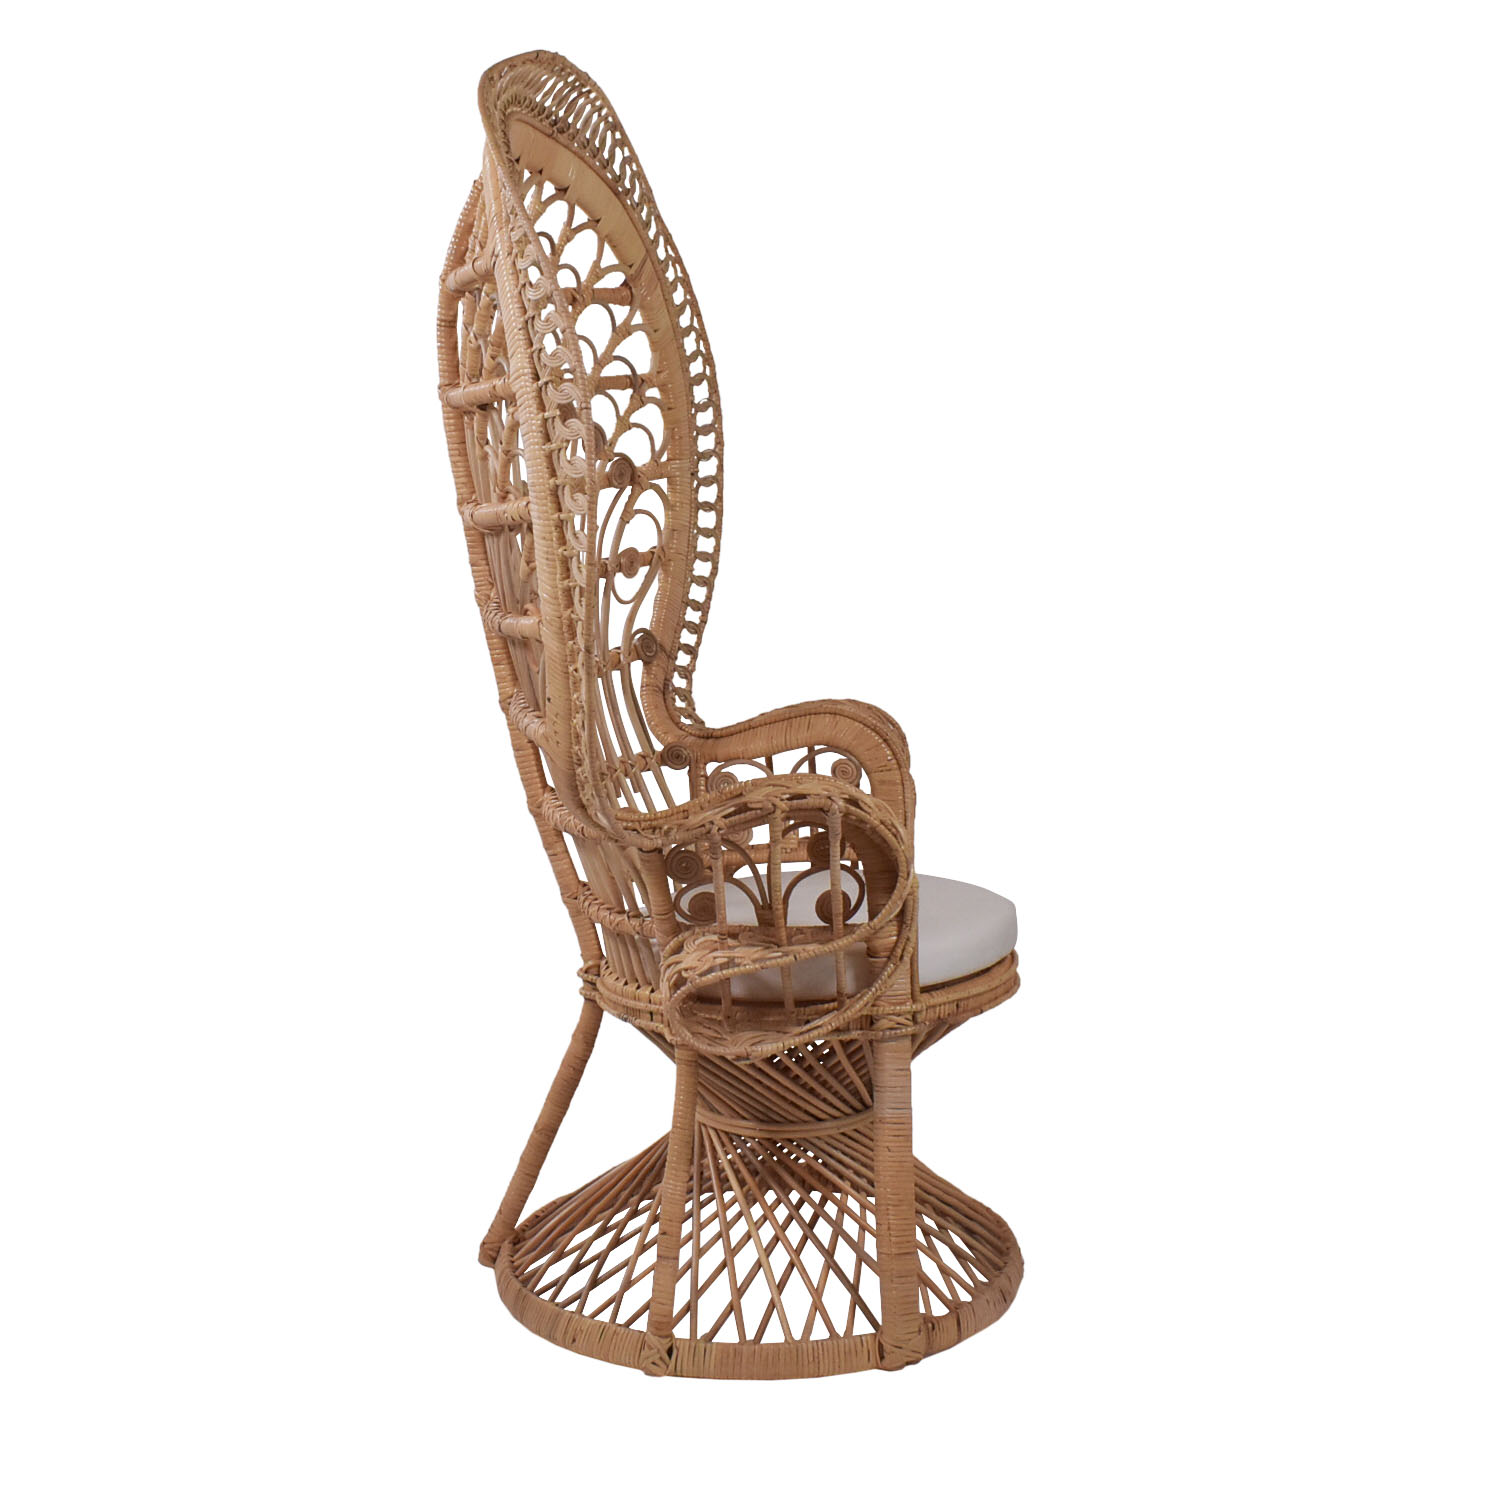 https://circawho.com/wp-content/uploads/Single-Classic-Peacock-Chair-CWO007-6.jpg